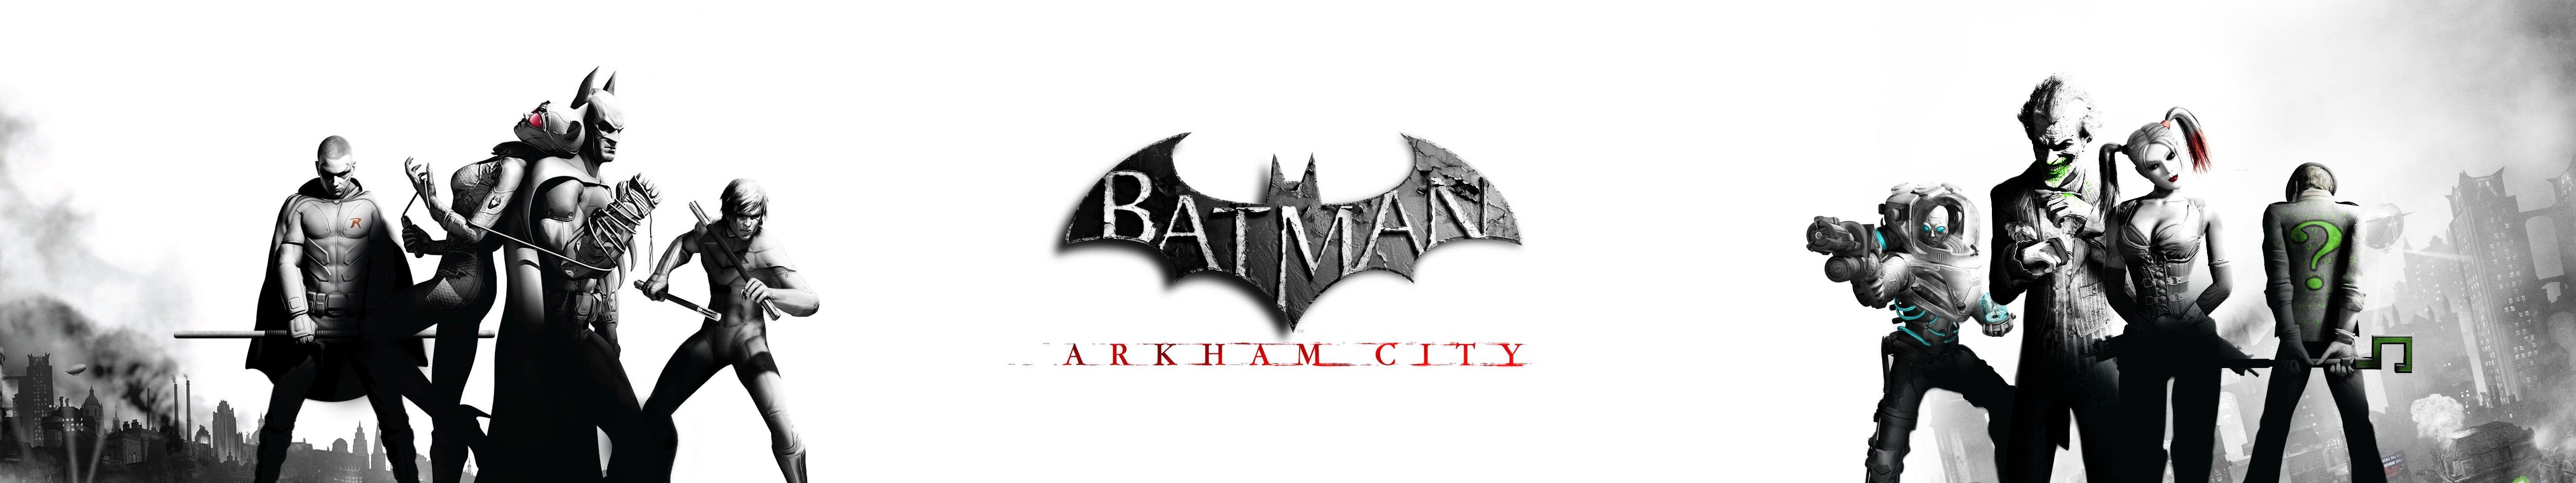 arkham #batman #city #film #monitors #movie #multi #multiple #screen #triple K #wallpaper #hdwallpaper #desktop. Batman arkham city, Arkham city, Batman arkham